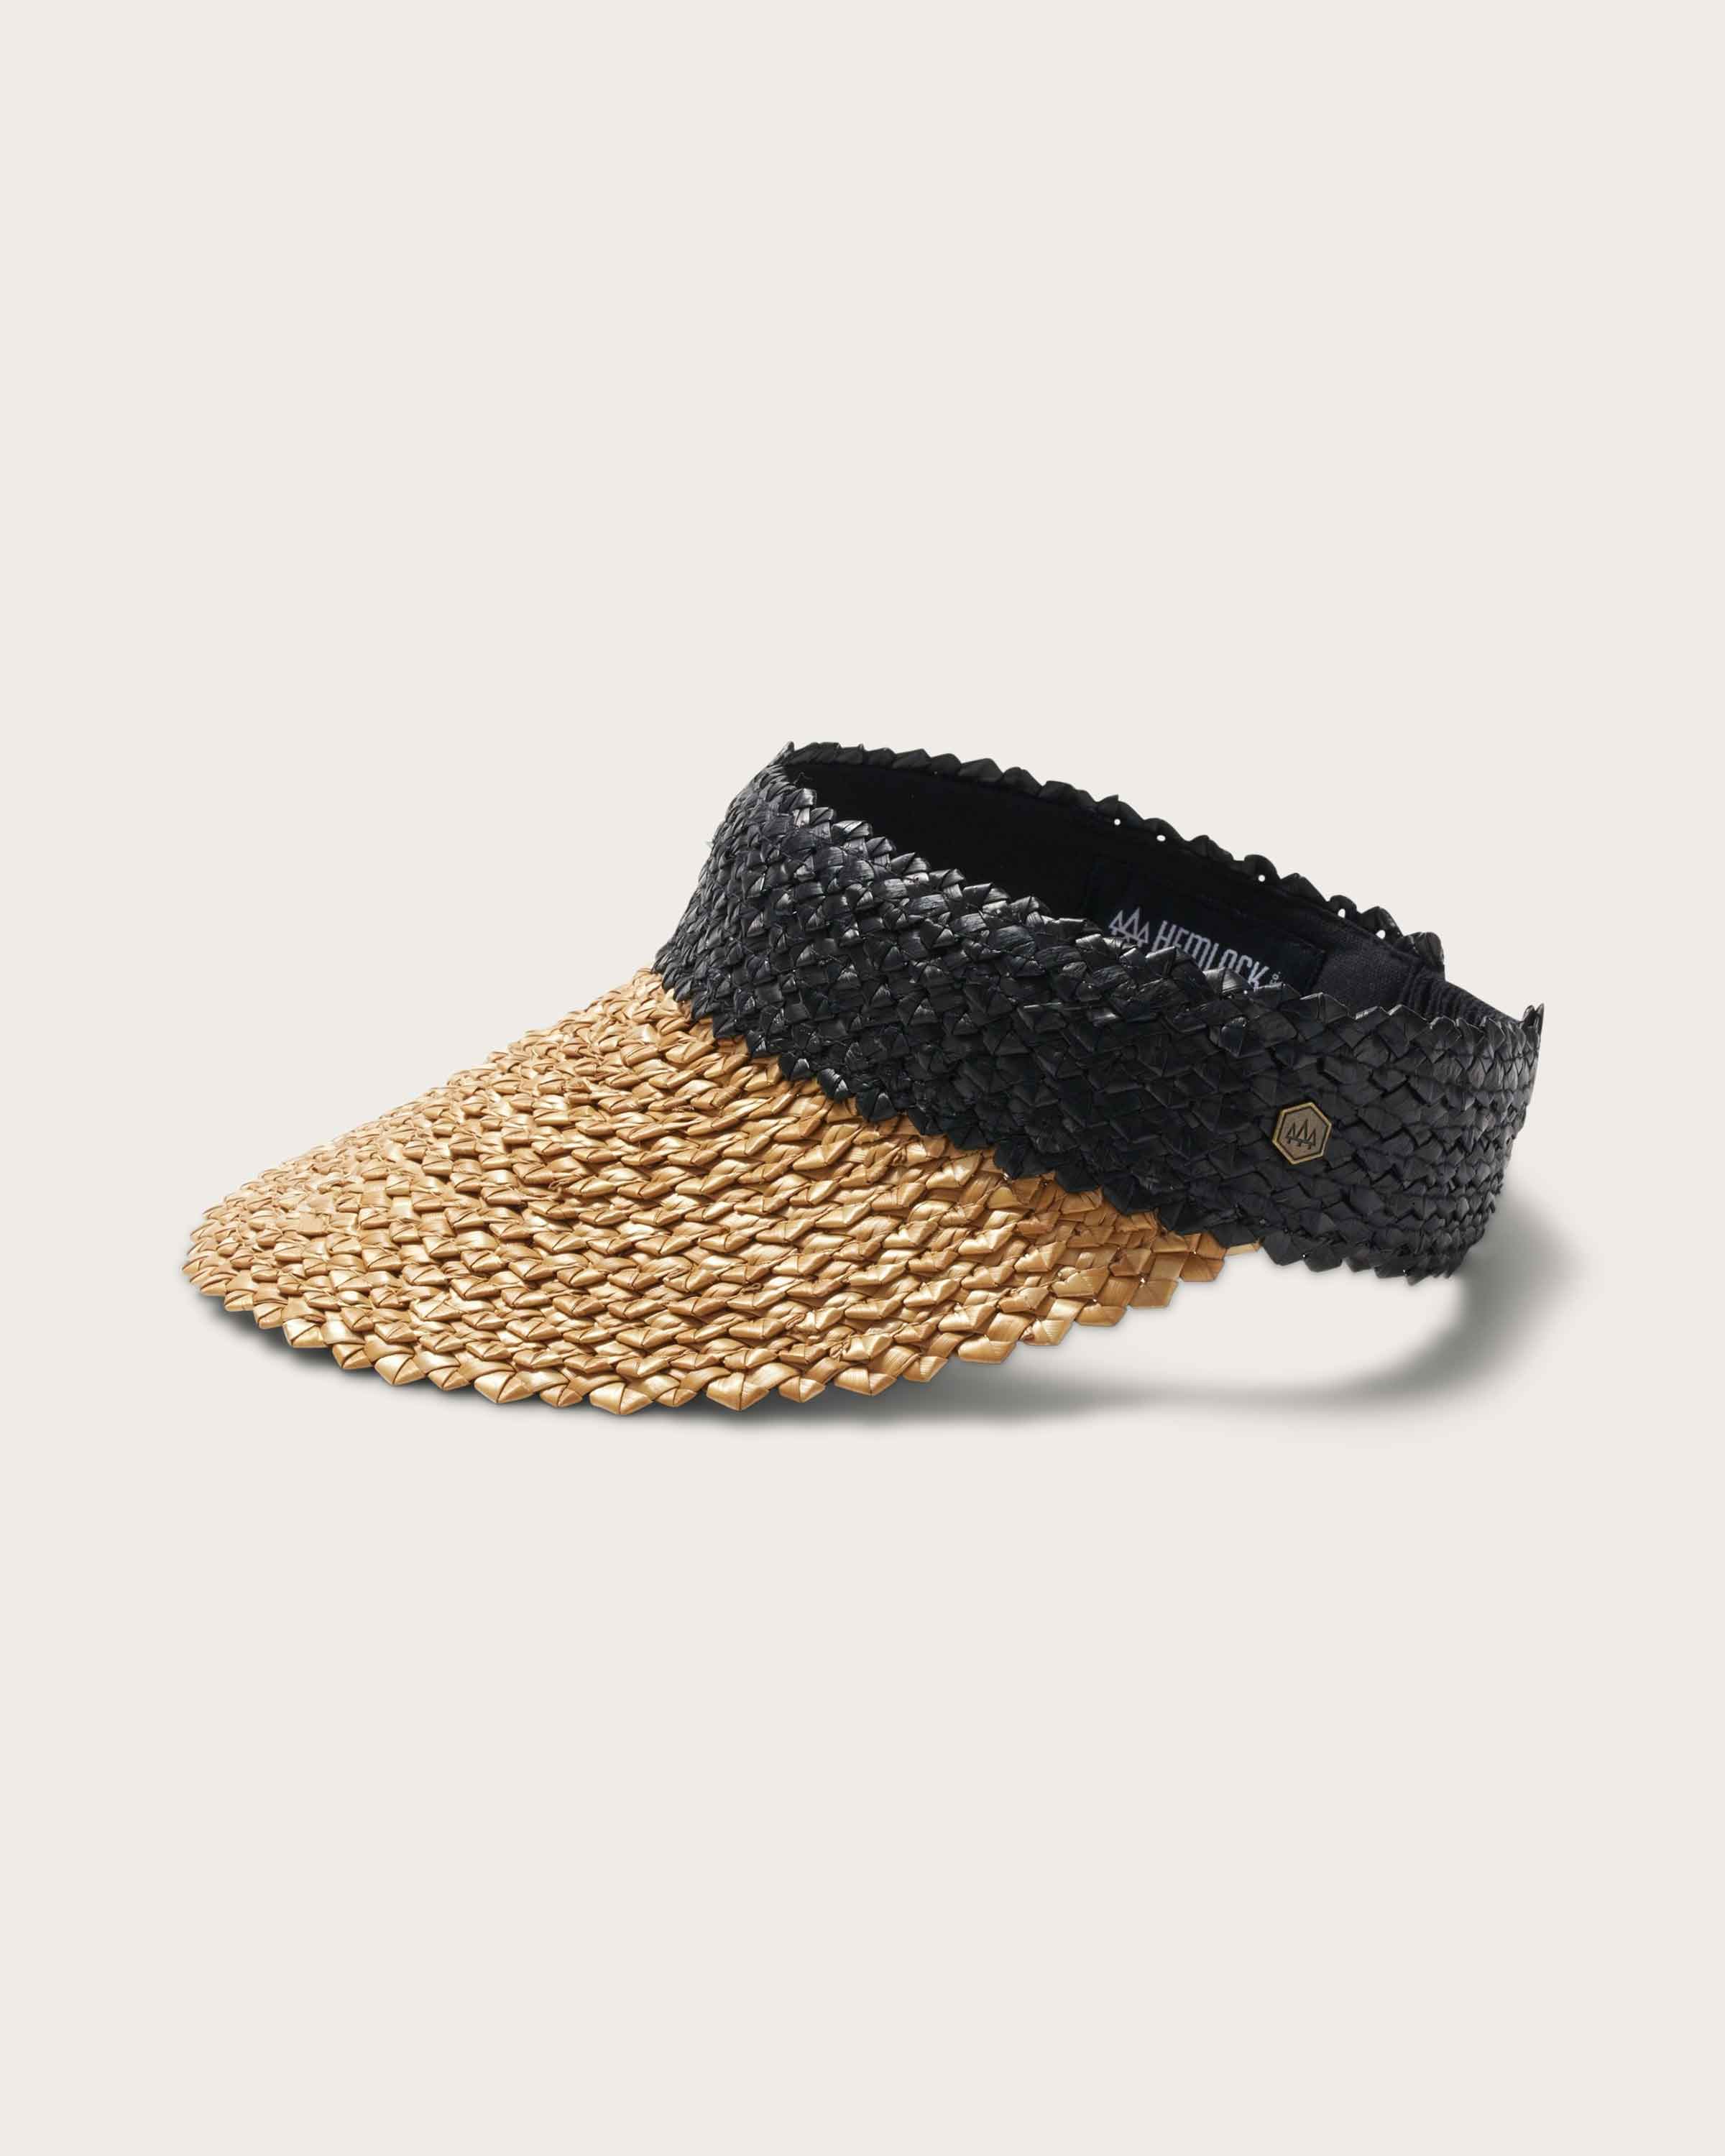 Hemlock Capri Straw visor in Black and Tan